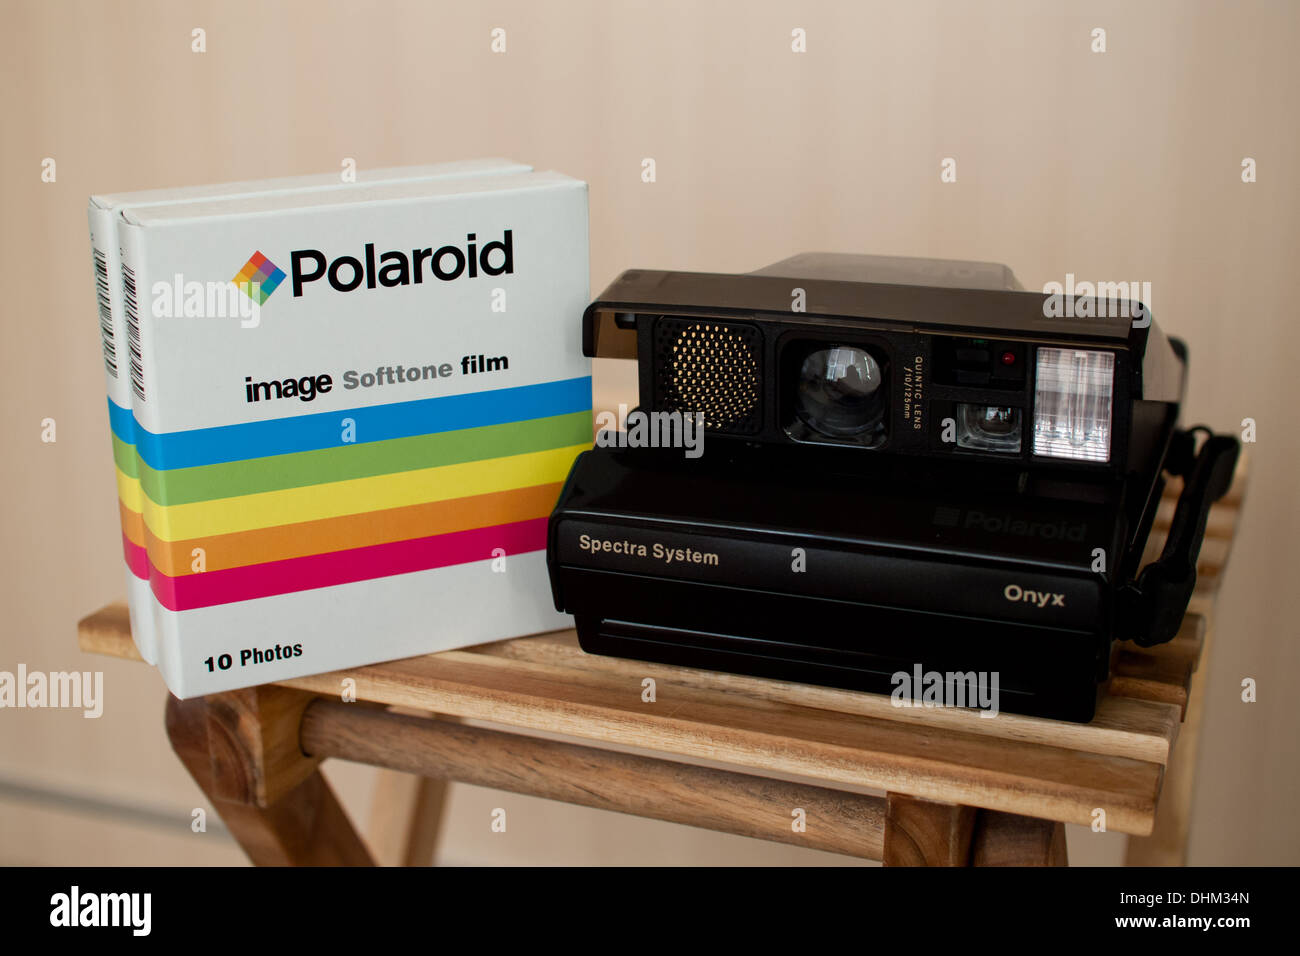 A Polaroid Spectra Onyx instant camera and Polaroid Image Softtone film  Stock Photo - Alamy